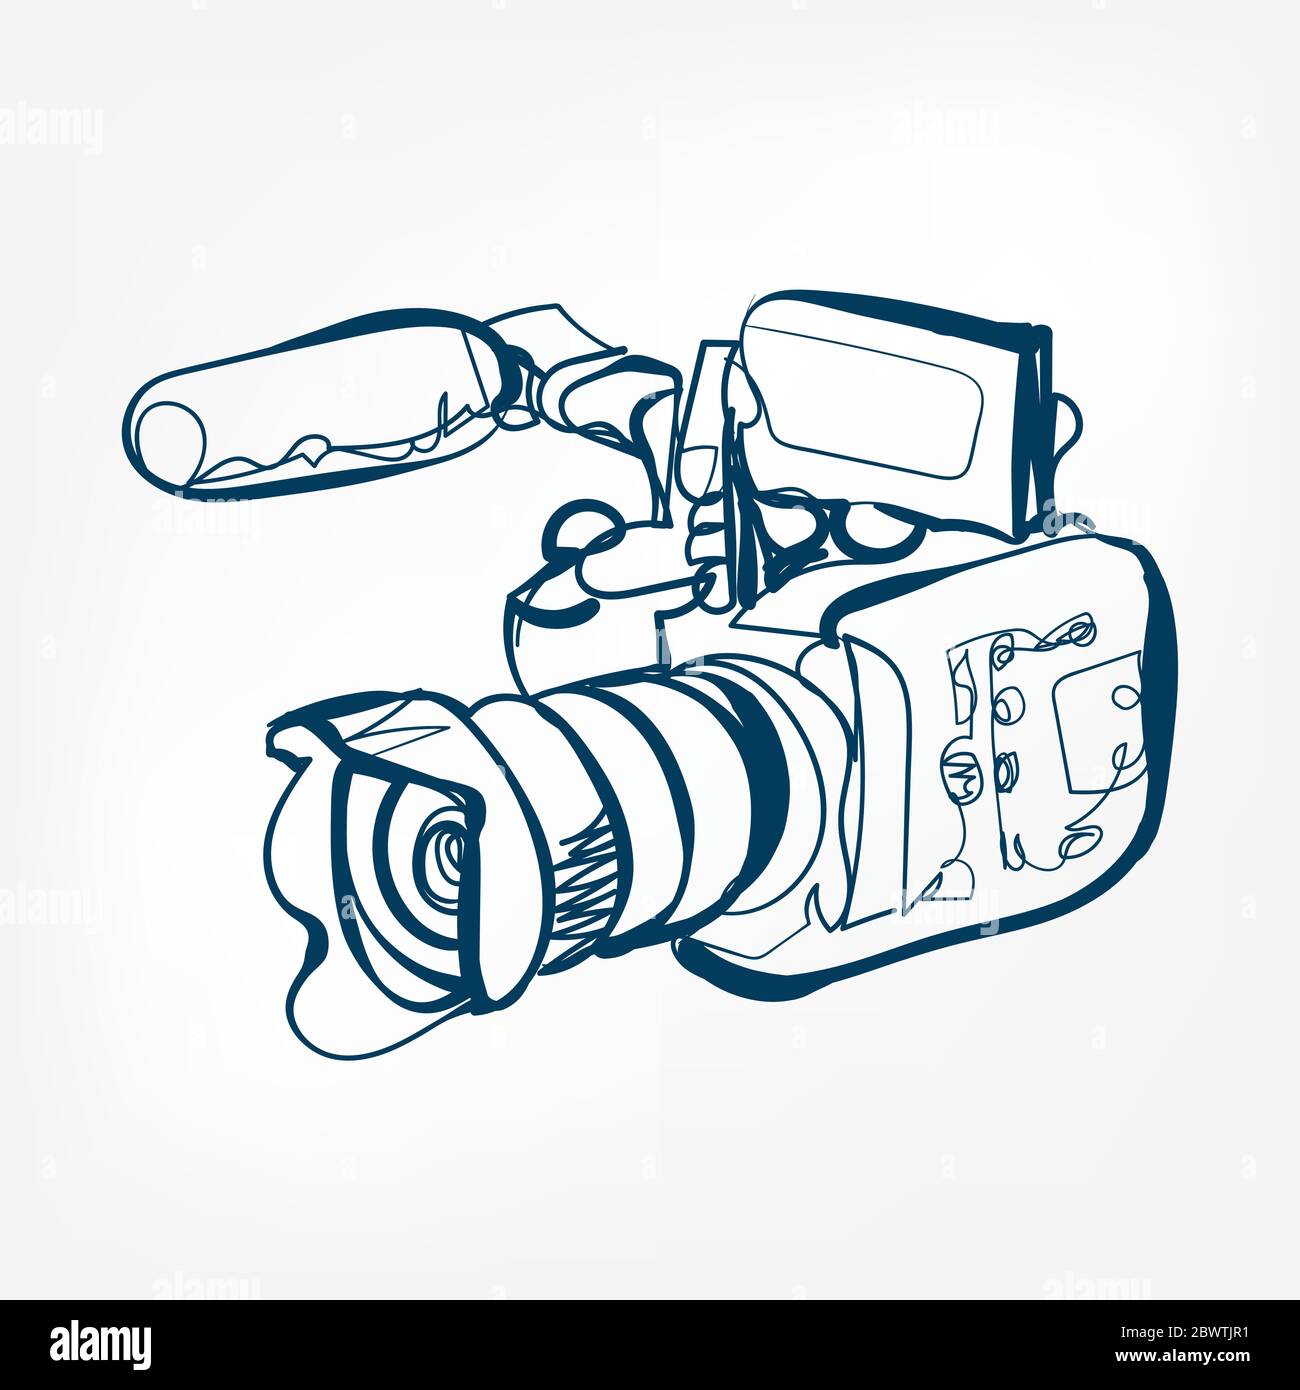 Slr Camera Hand Drawn Sketch Vector Stock Vector (Royalty Free) 610805627 |  Shutterstock